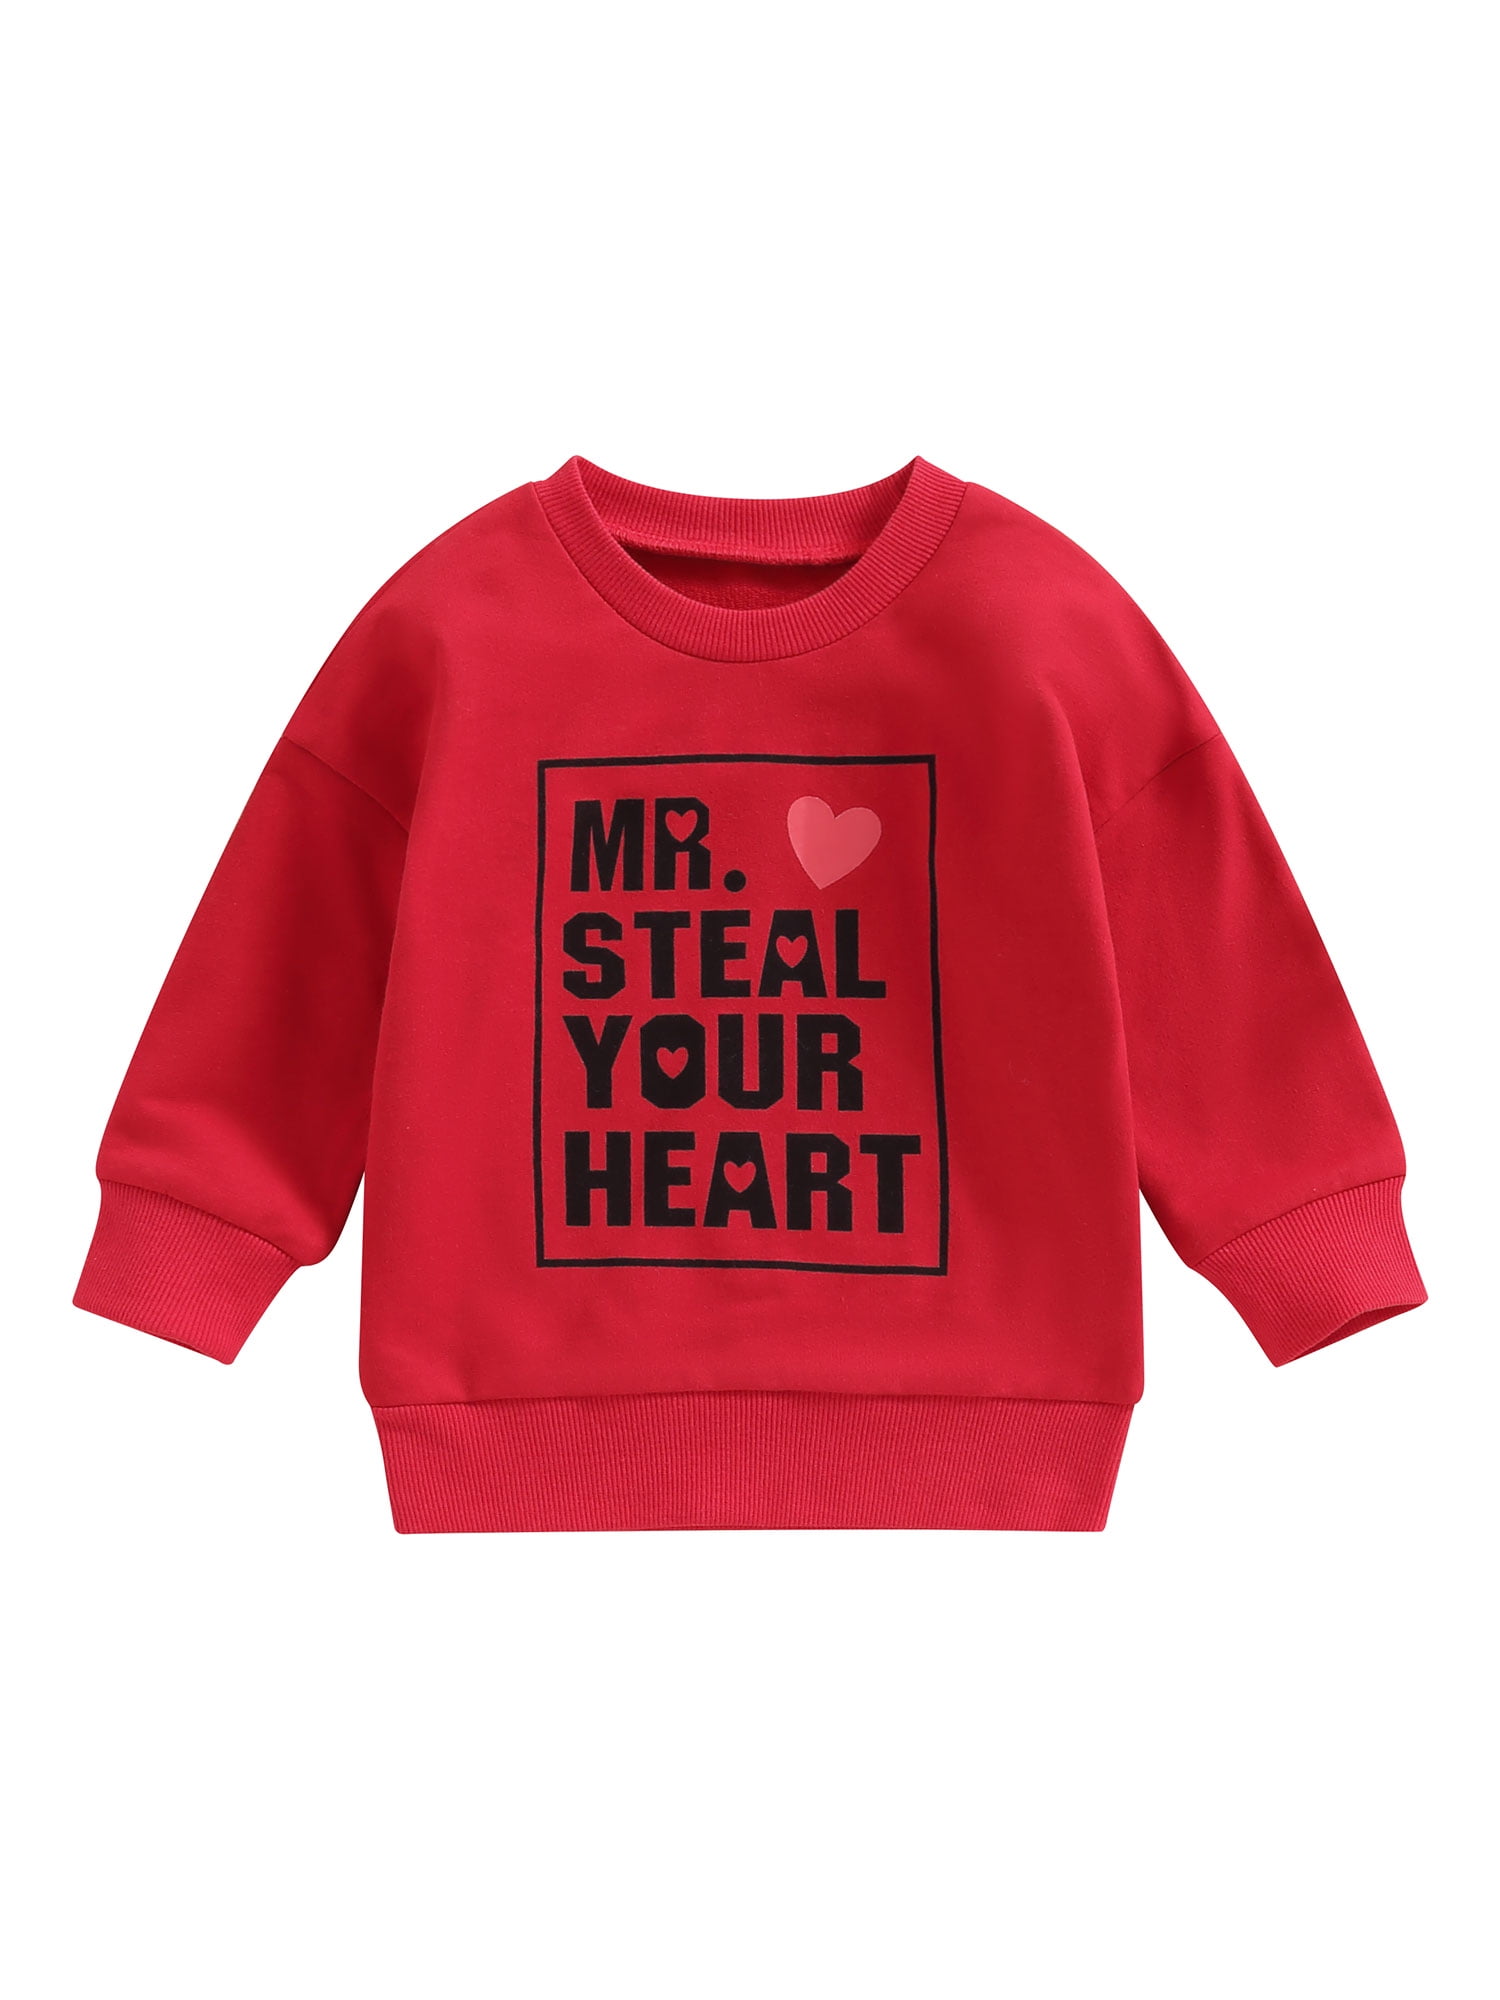 Bagilaanoe Toddler Baby Boy Valentine's Day Sweatshirt Long Sleeve Letter  Print Pullover 6M 12M 18M 24M 3T 4T 5T Kids Loose Tee Tops